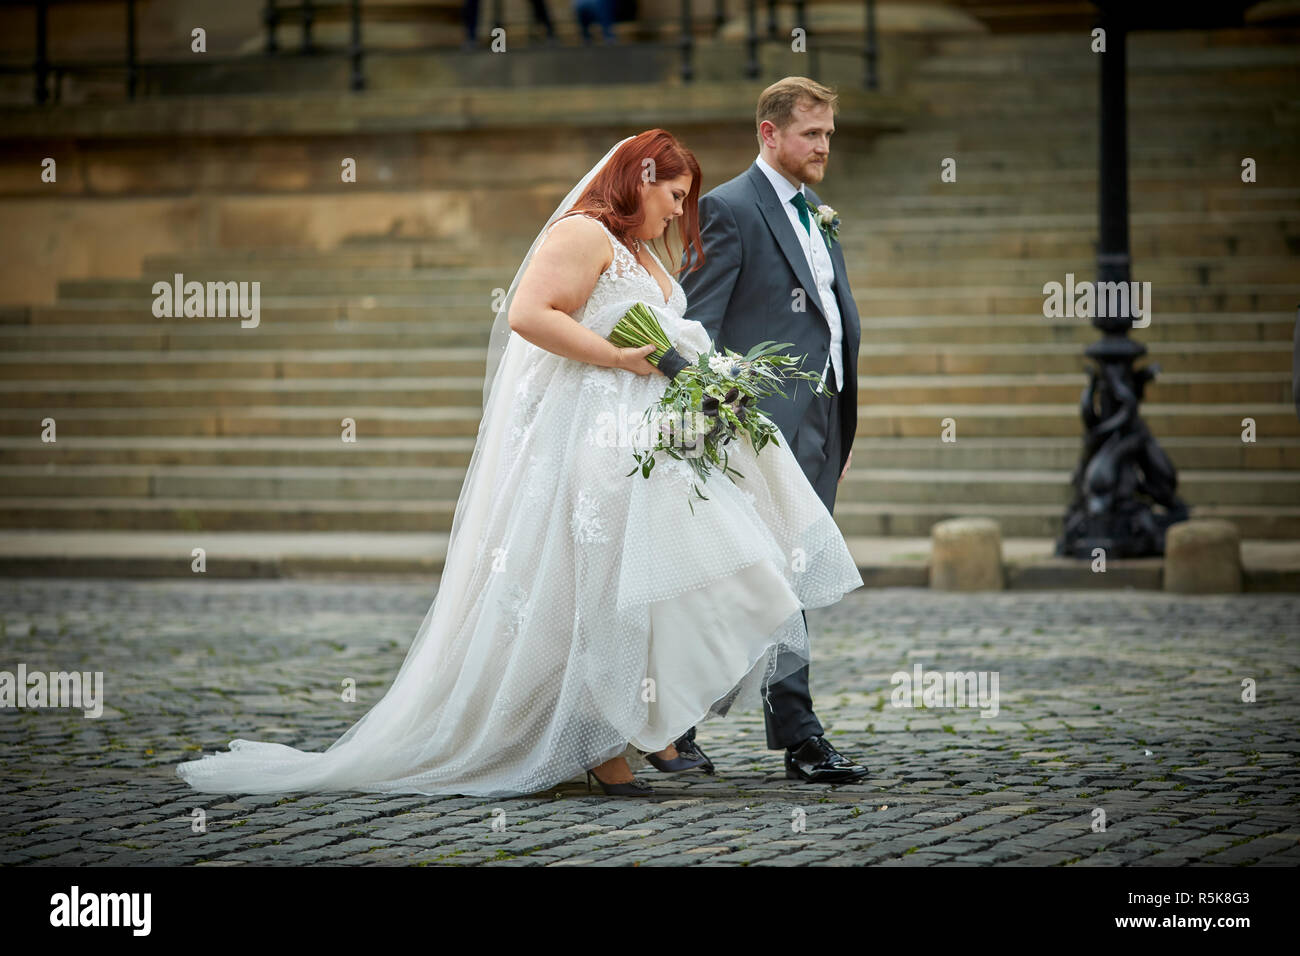 Liverpool city centre a wedding couple Stock Photo